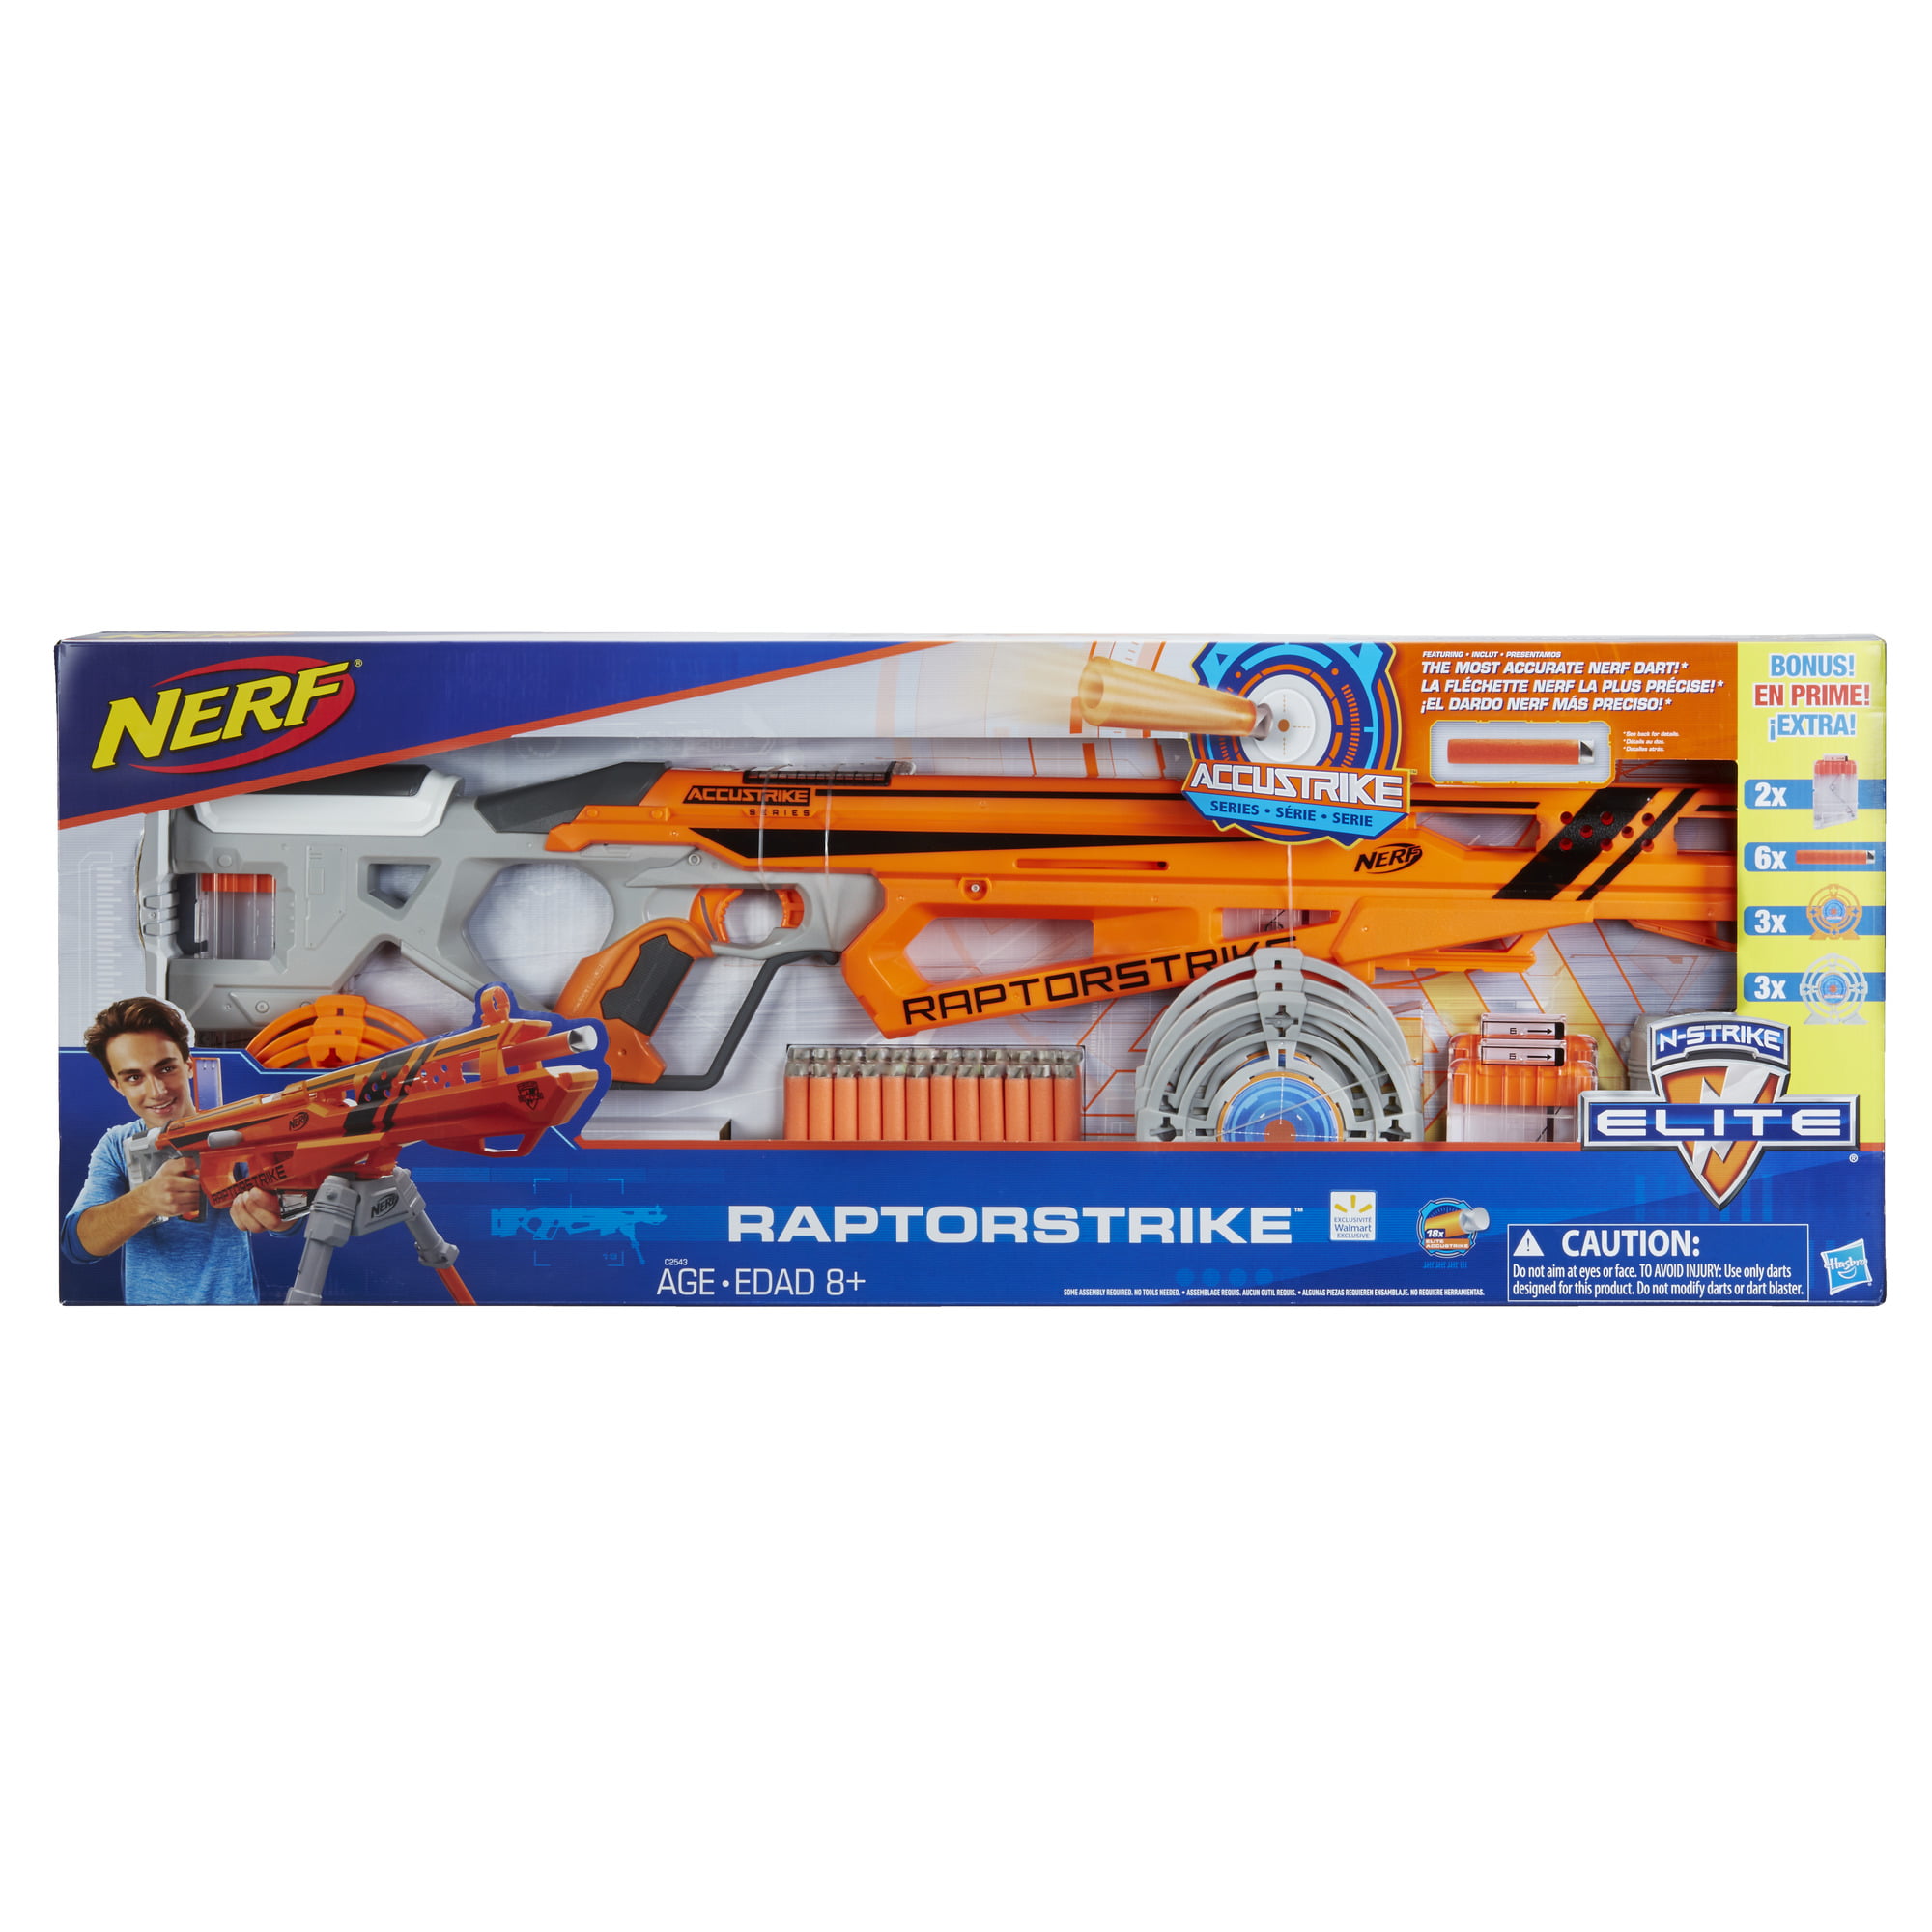 Nerf N-Strike AccuStrike RaptorStrike Walmart.com